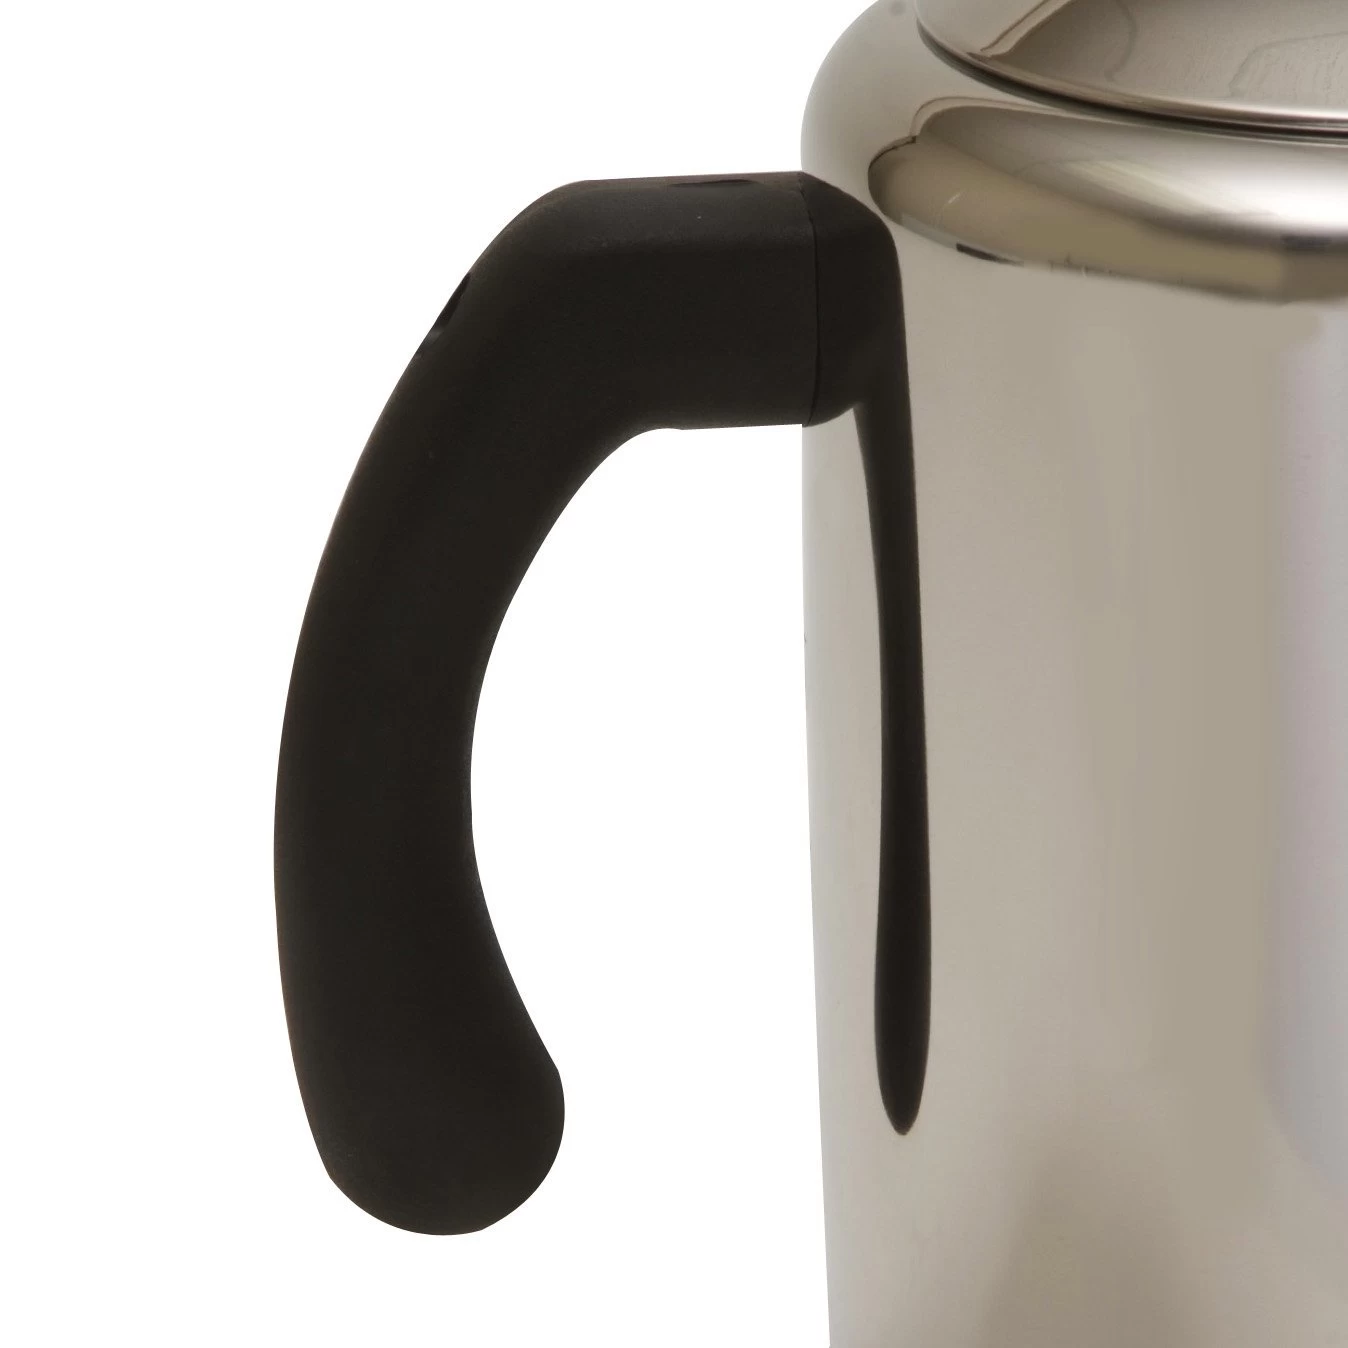 OEM coffee pot manufacturer rainbow coffee pot manufacturer china Stainless Steel  Coffee pot wholesales